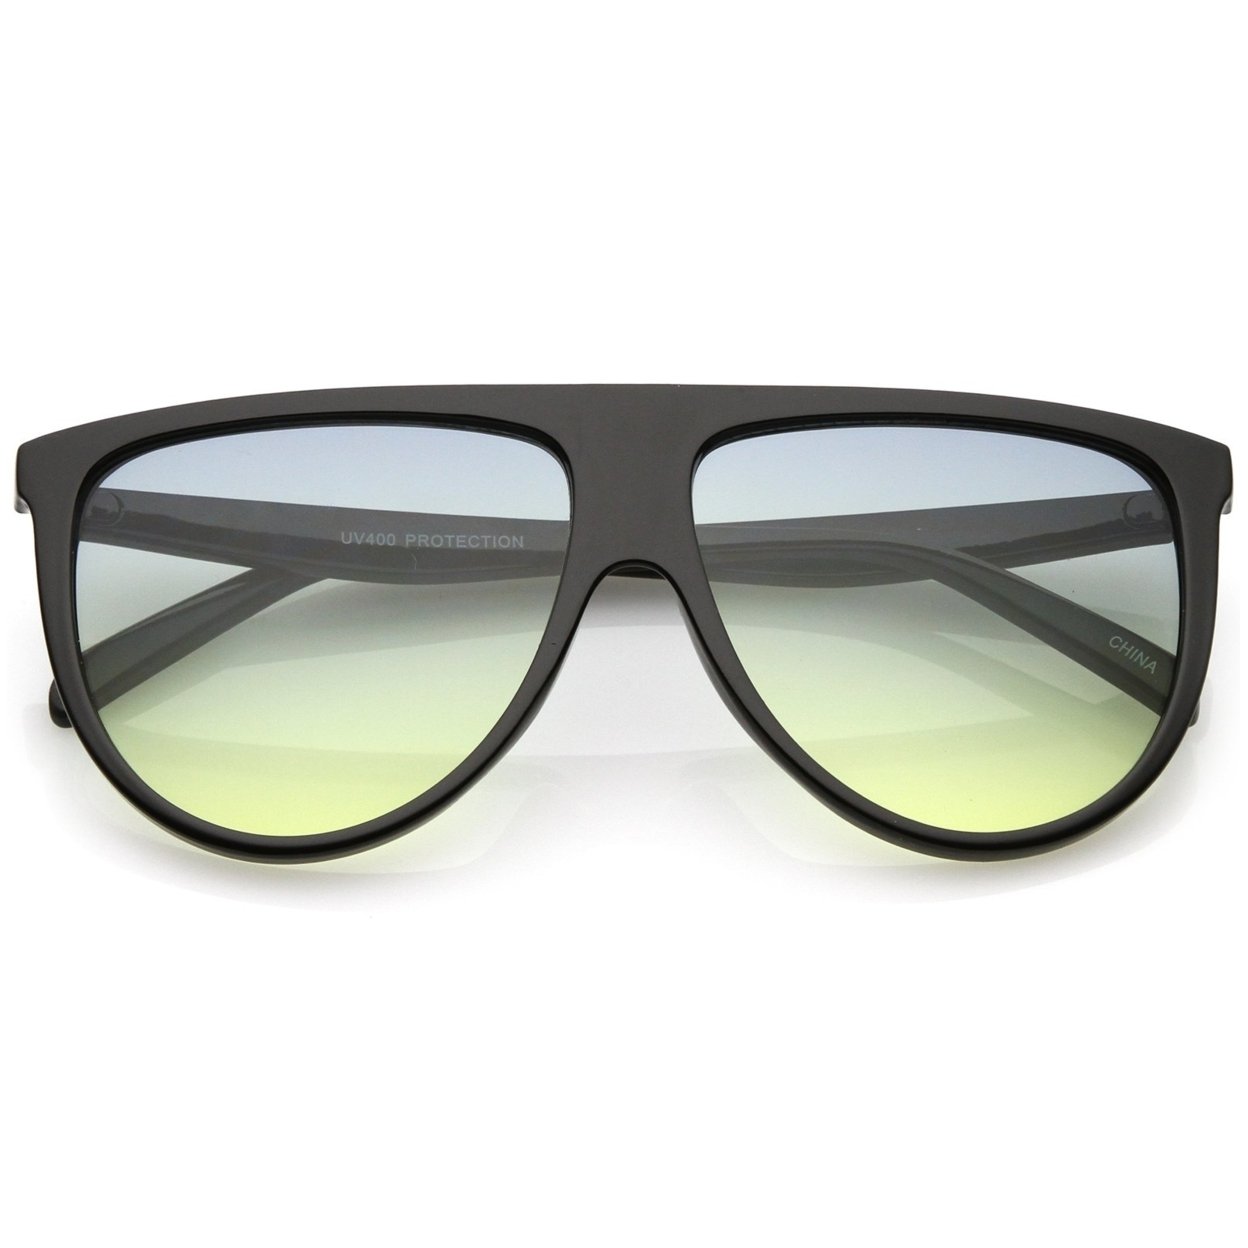 Oversize Flat Top Aviator Sunglasses Gradient Teardrop Flat Lens 60mm - Tortoise / Orange Yellow